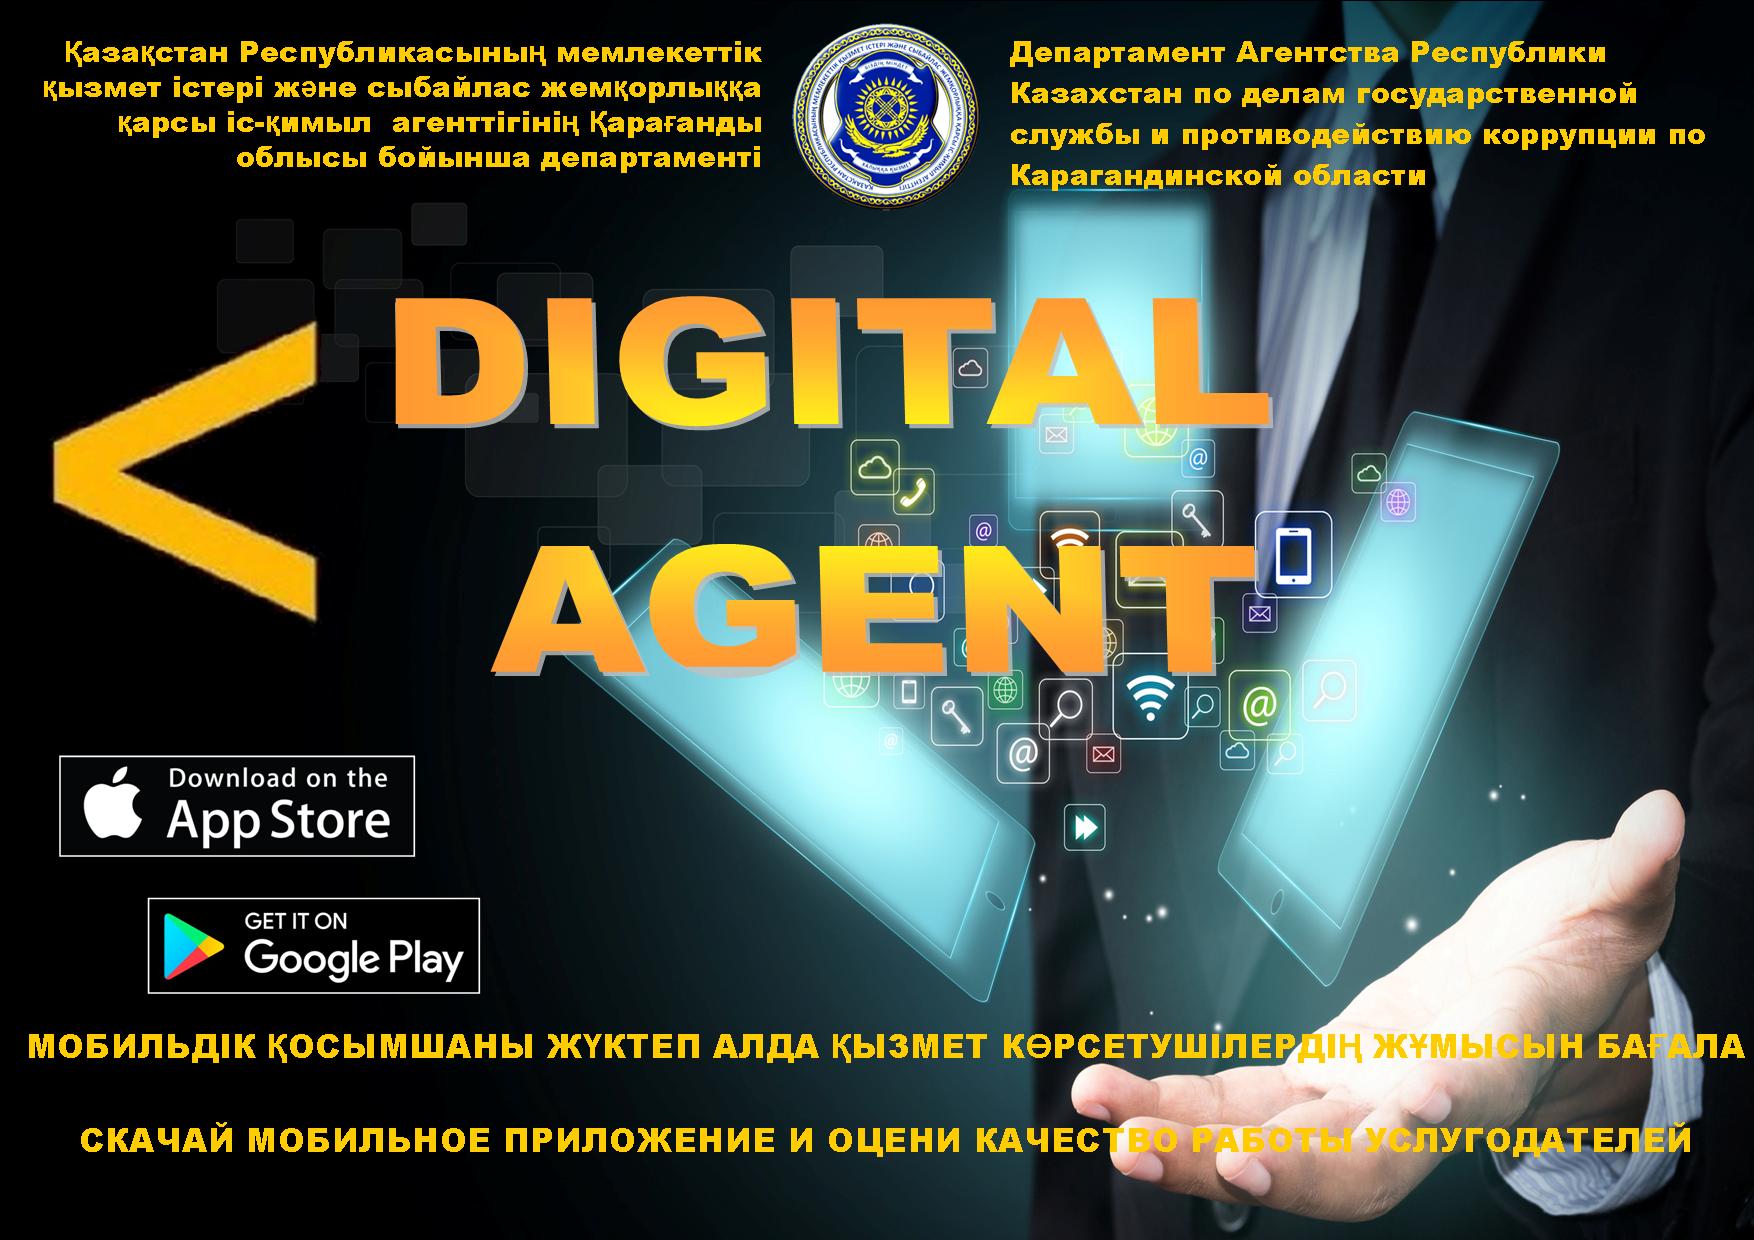 Digital agent mobile app